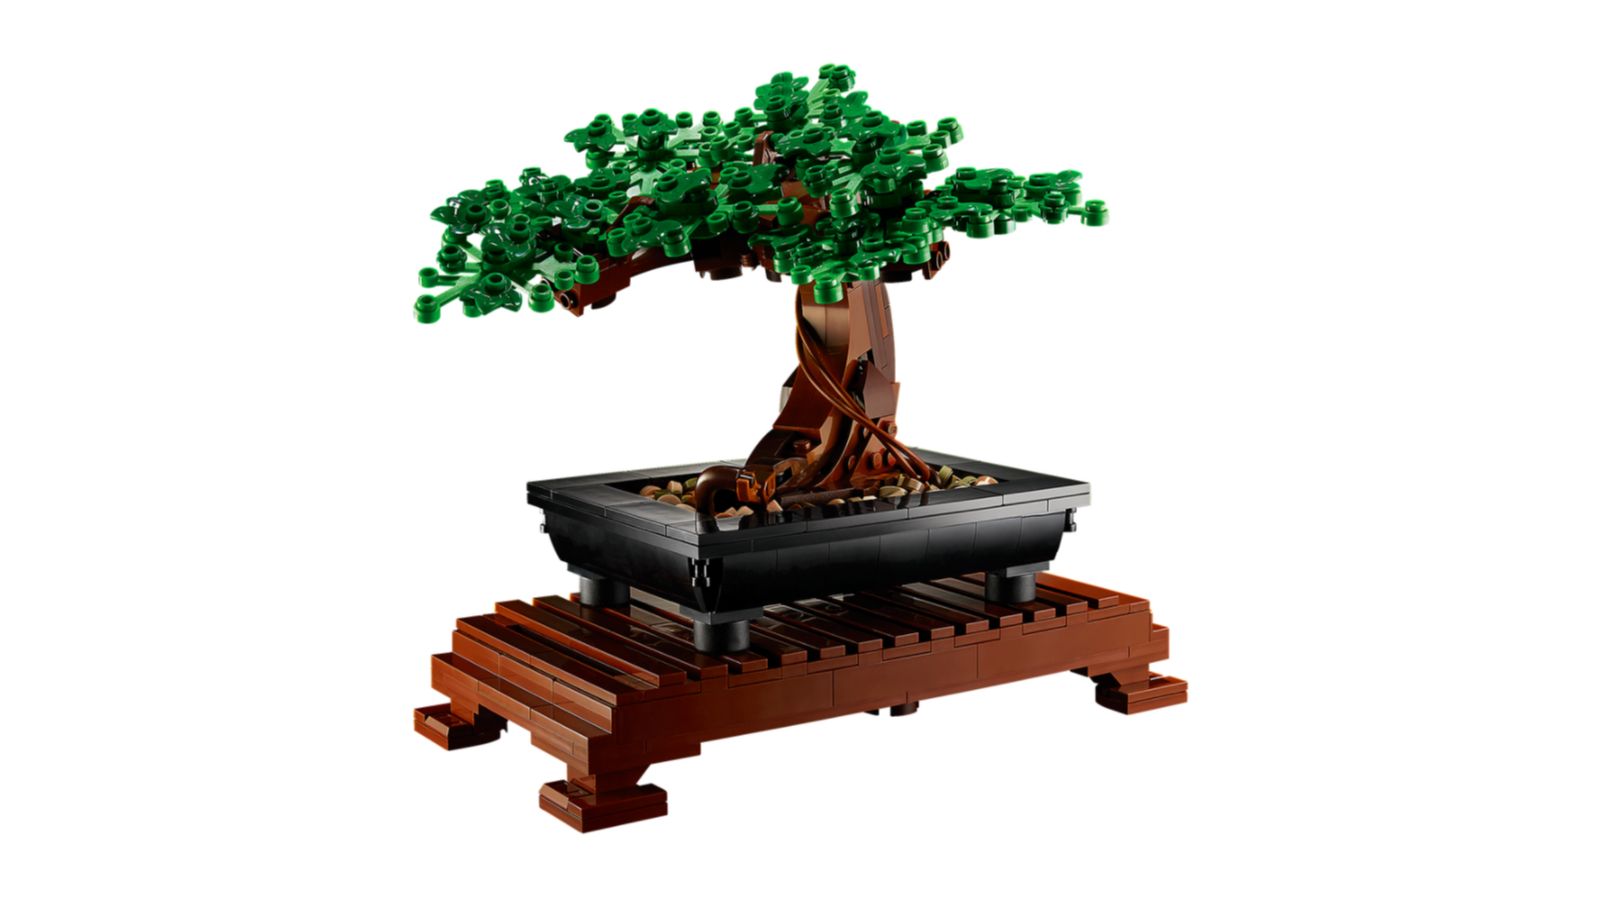 LEGO Creator Expert Bonsai Tree set